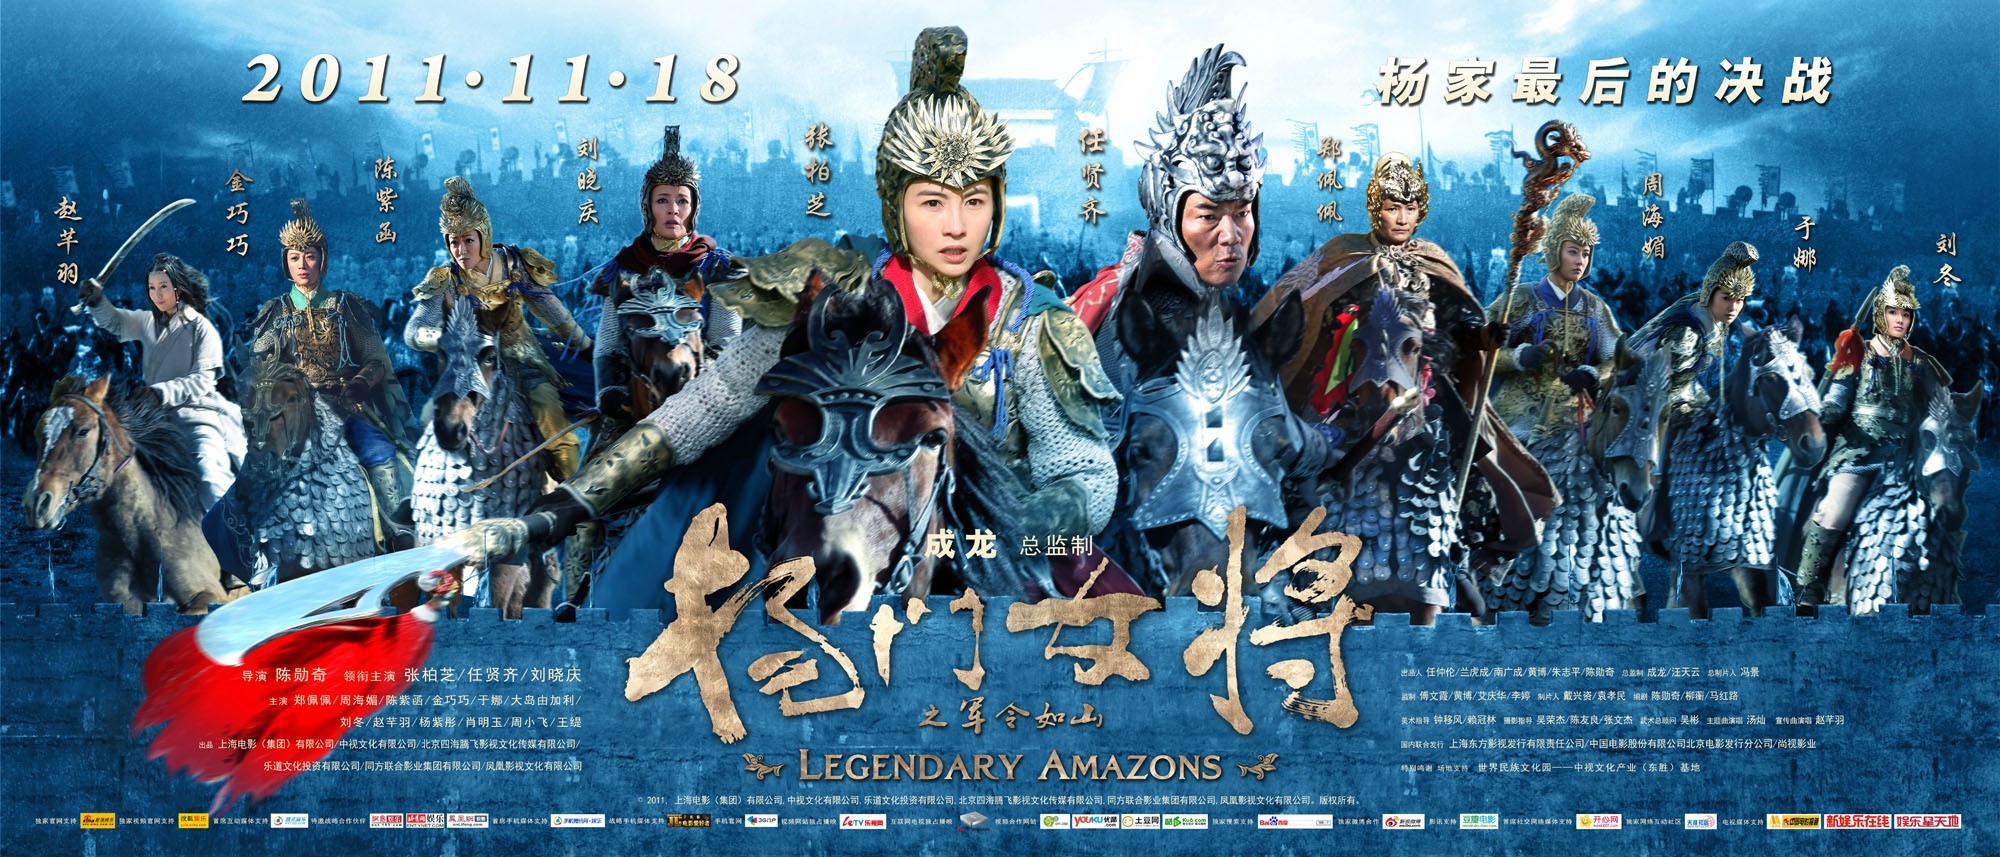 Mega Sized Movie Poster Image for Legendary Amazons (#5 of 7)